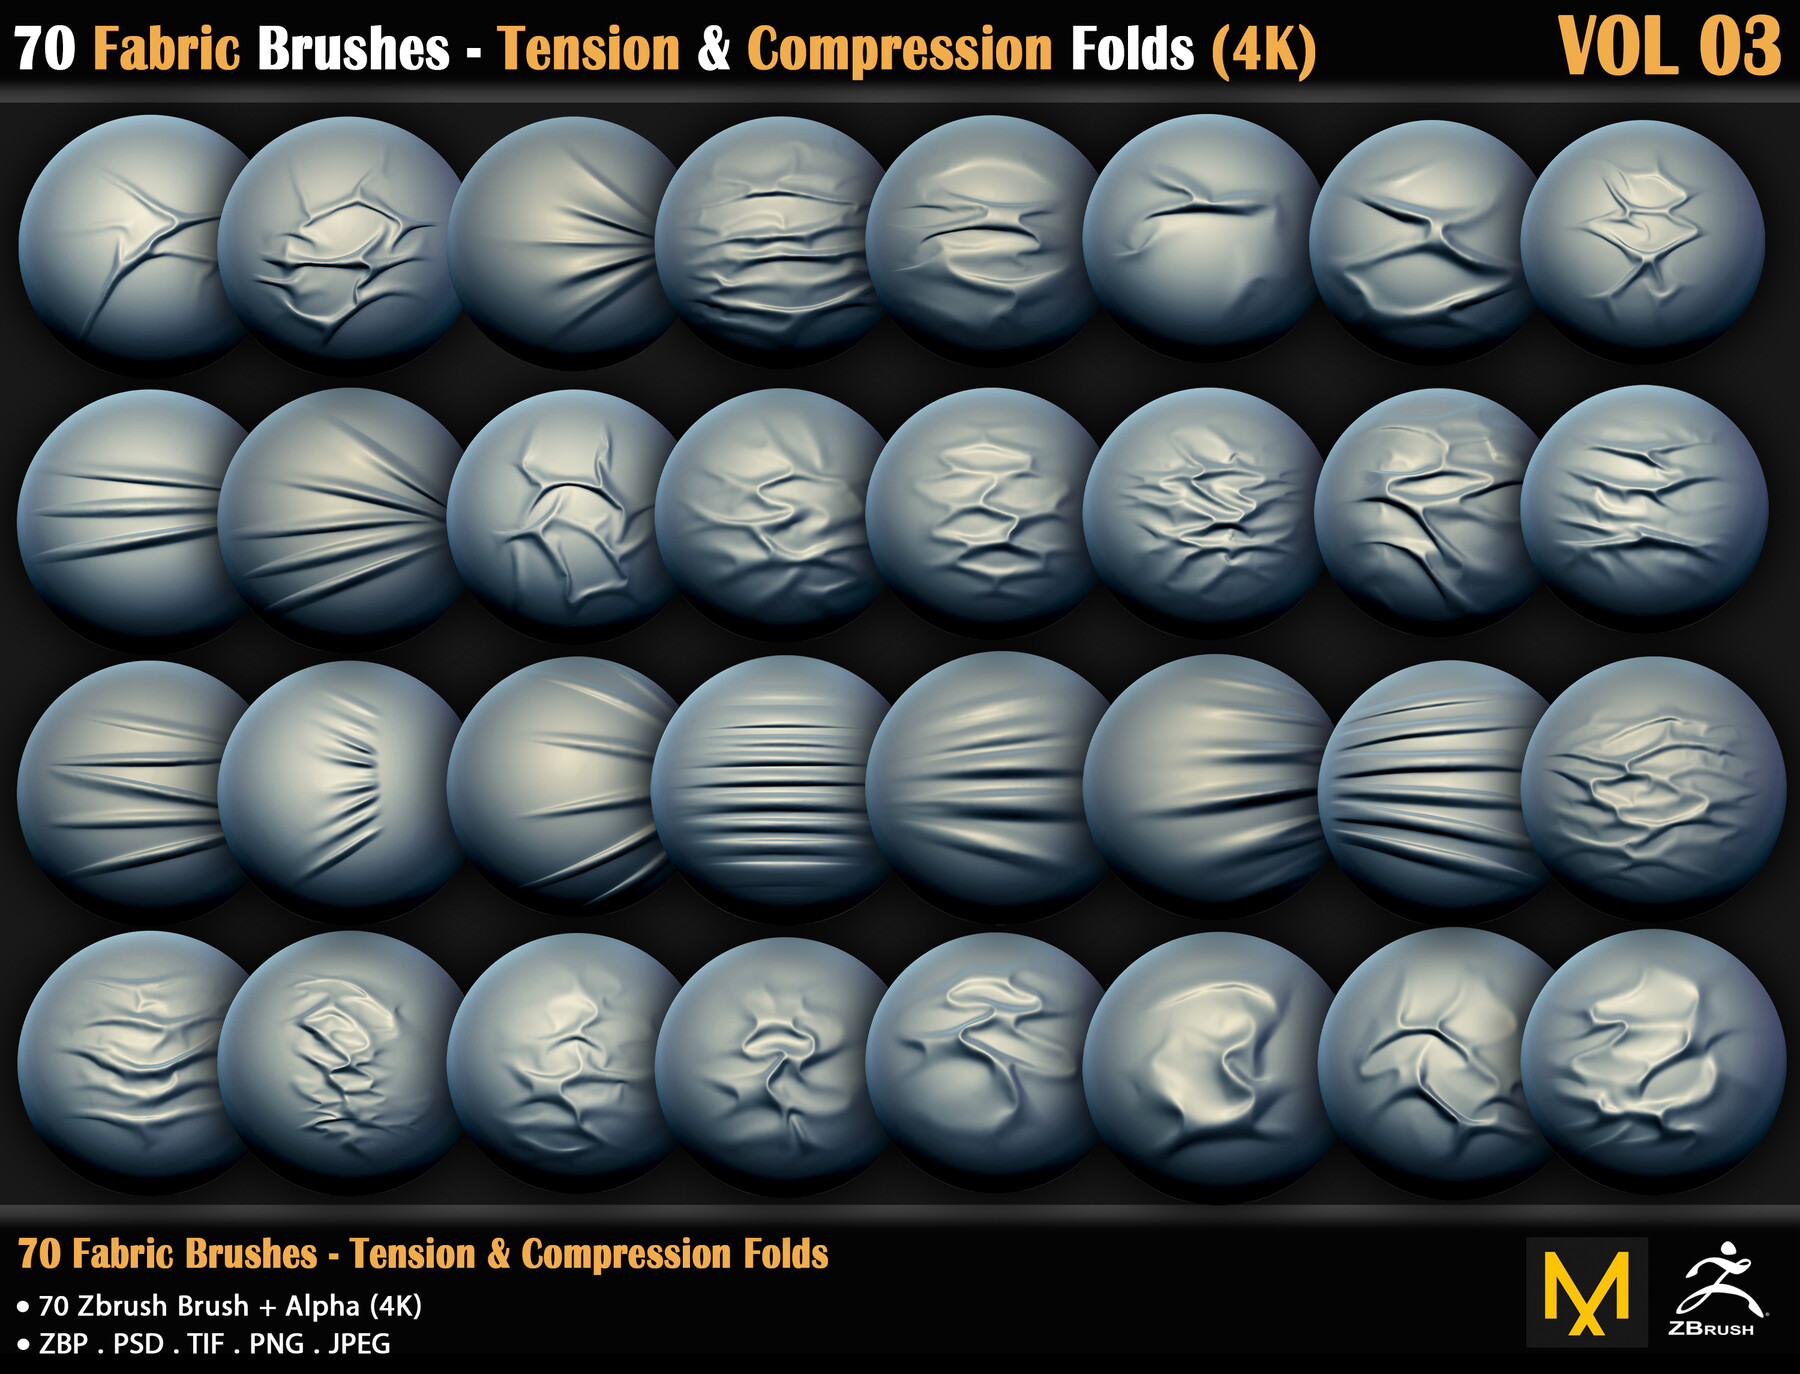 ArtStation - 70 Fabric Brushes - Tension & Compression Folds - 4K (VOL 03)